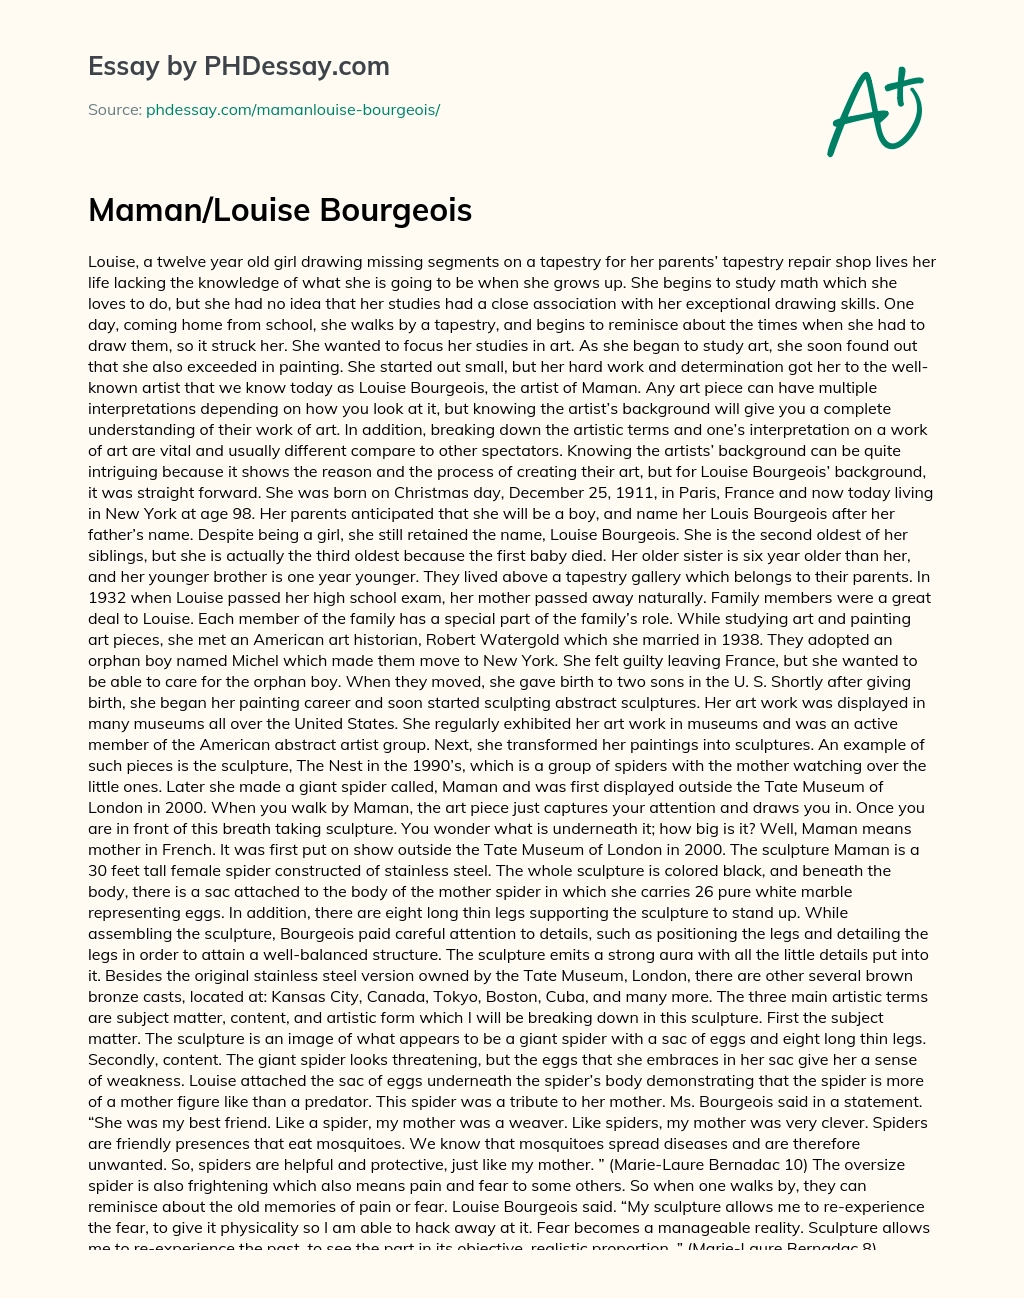 Maman/Louise Bourgeois essay